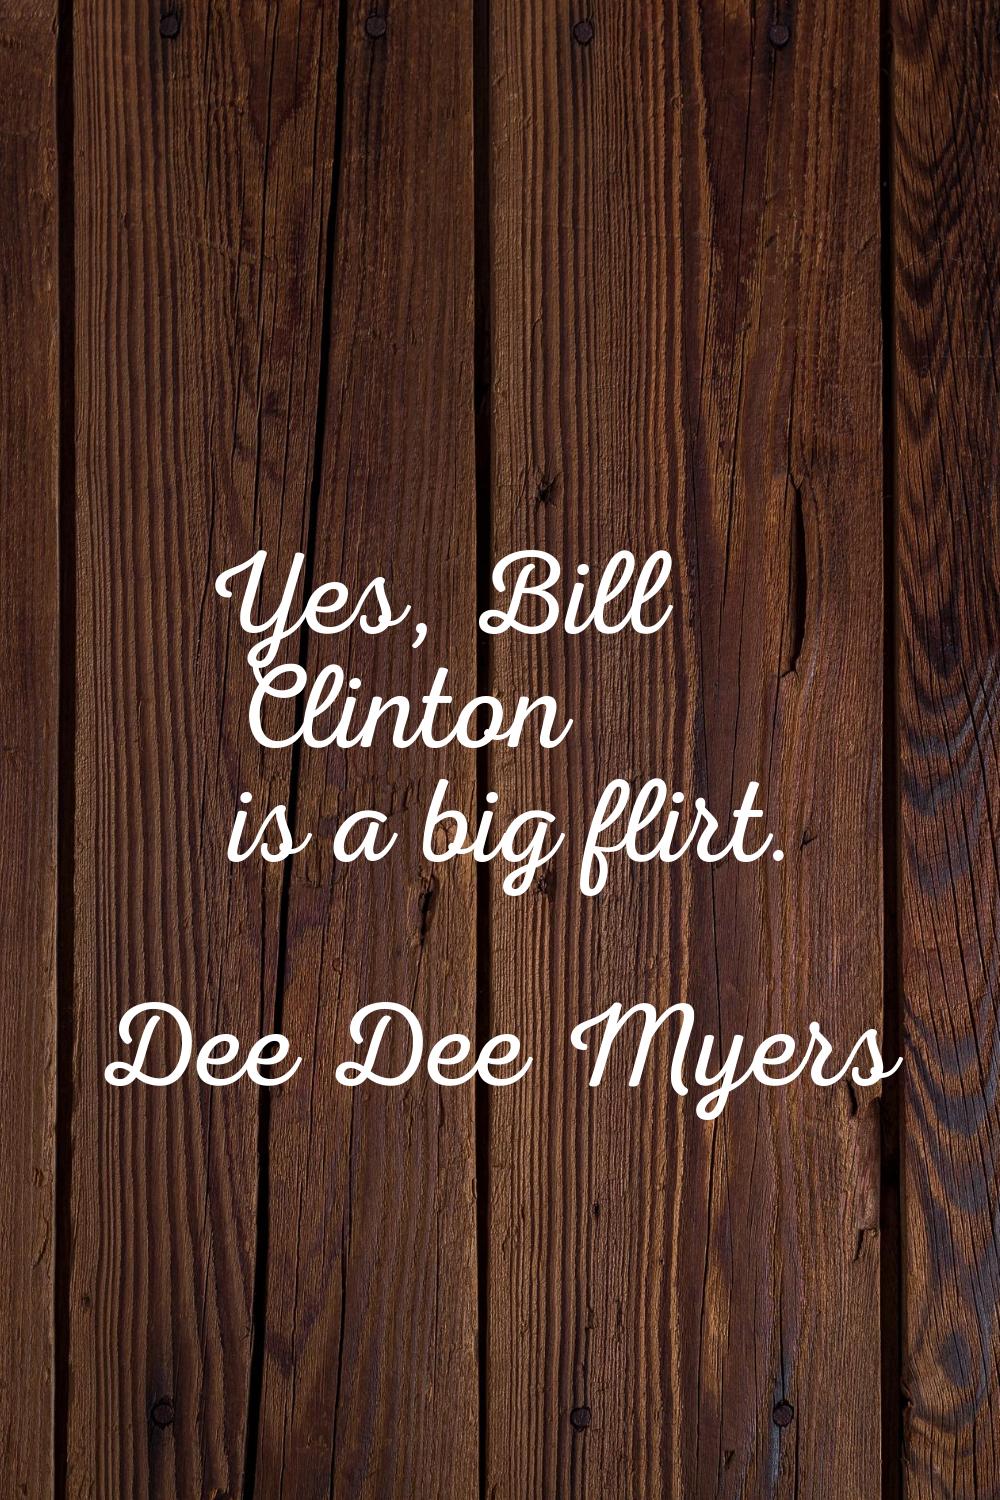 Yes, Bill Clinton is a big flirt.